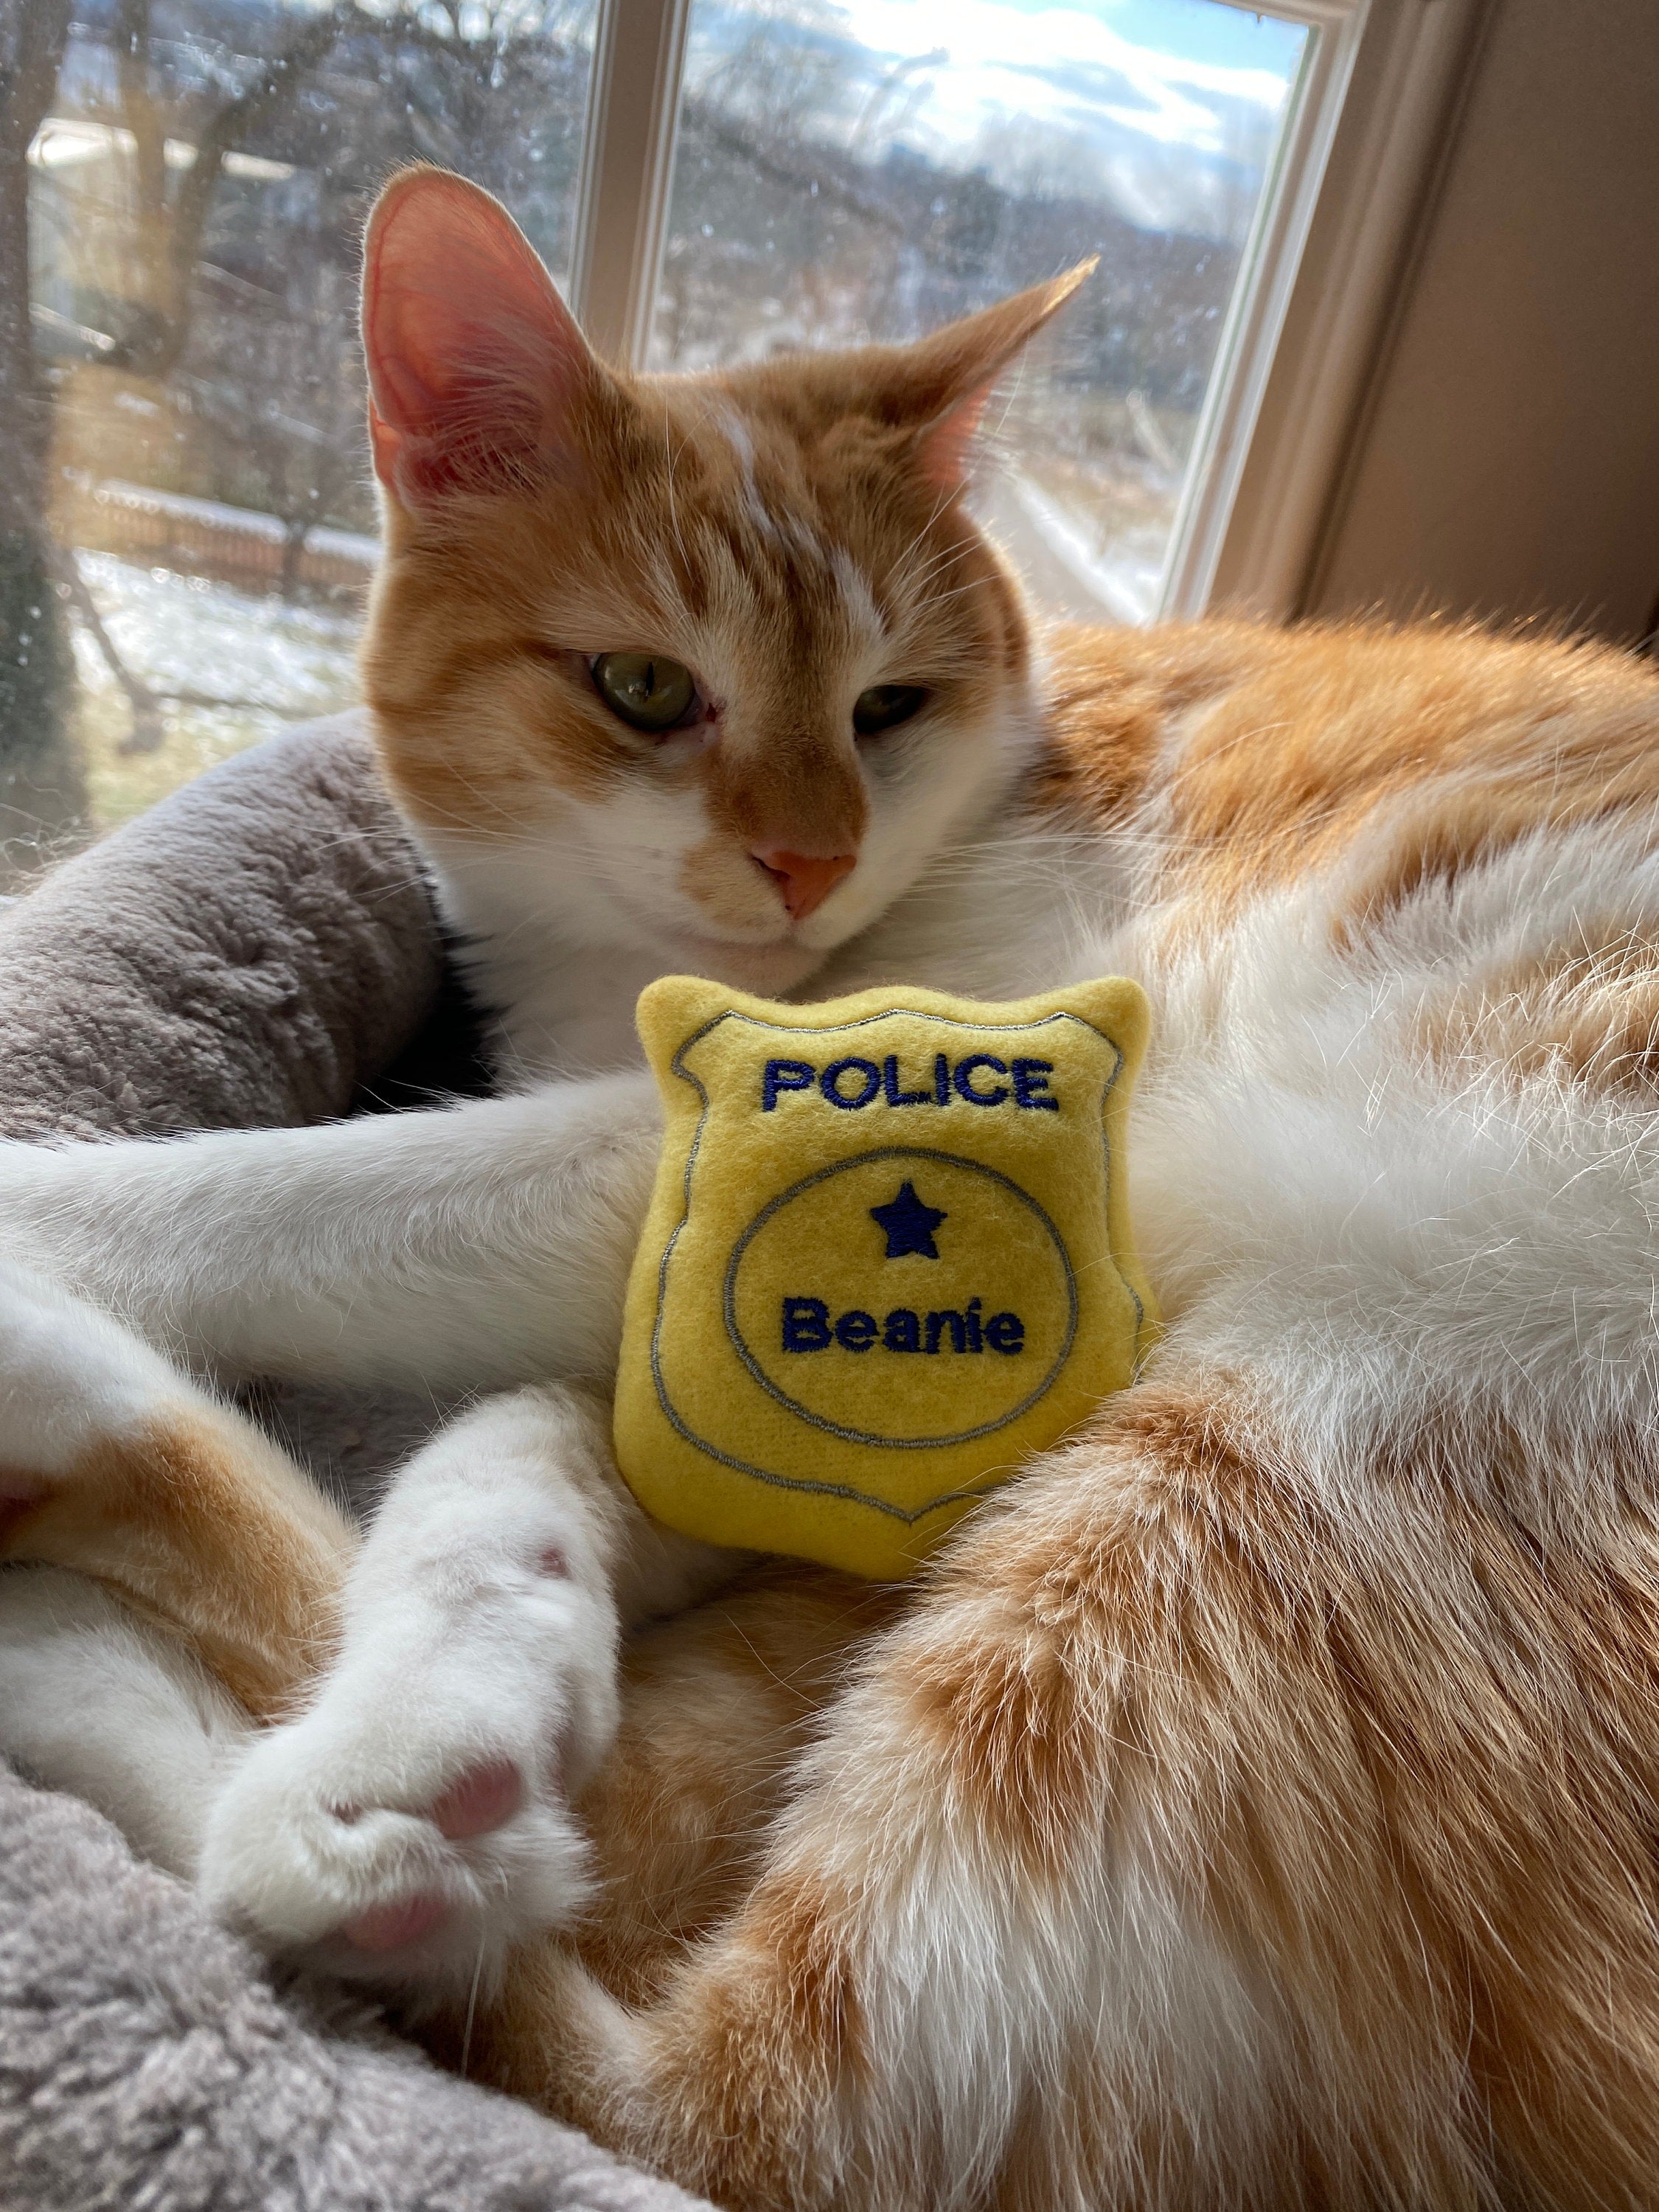 Police Badge Custom Cat Toy - Personalized Catnip Toy